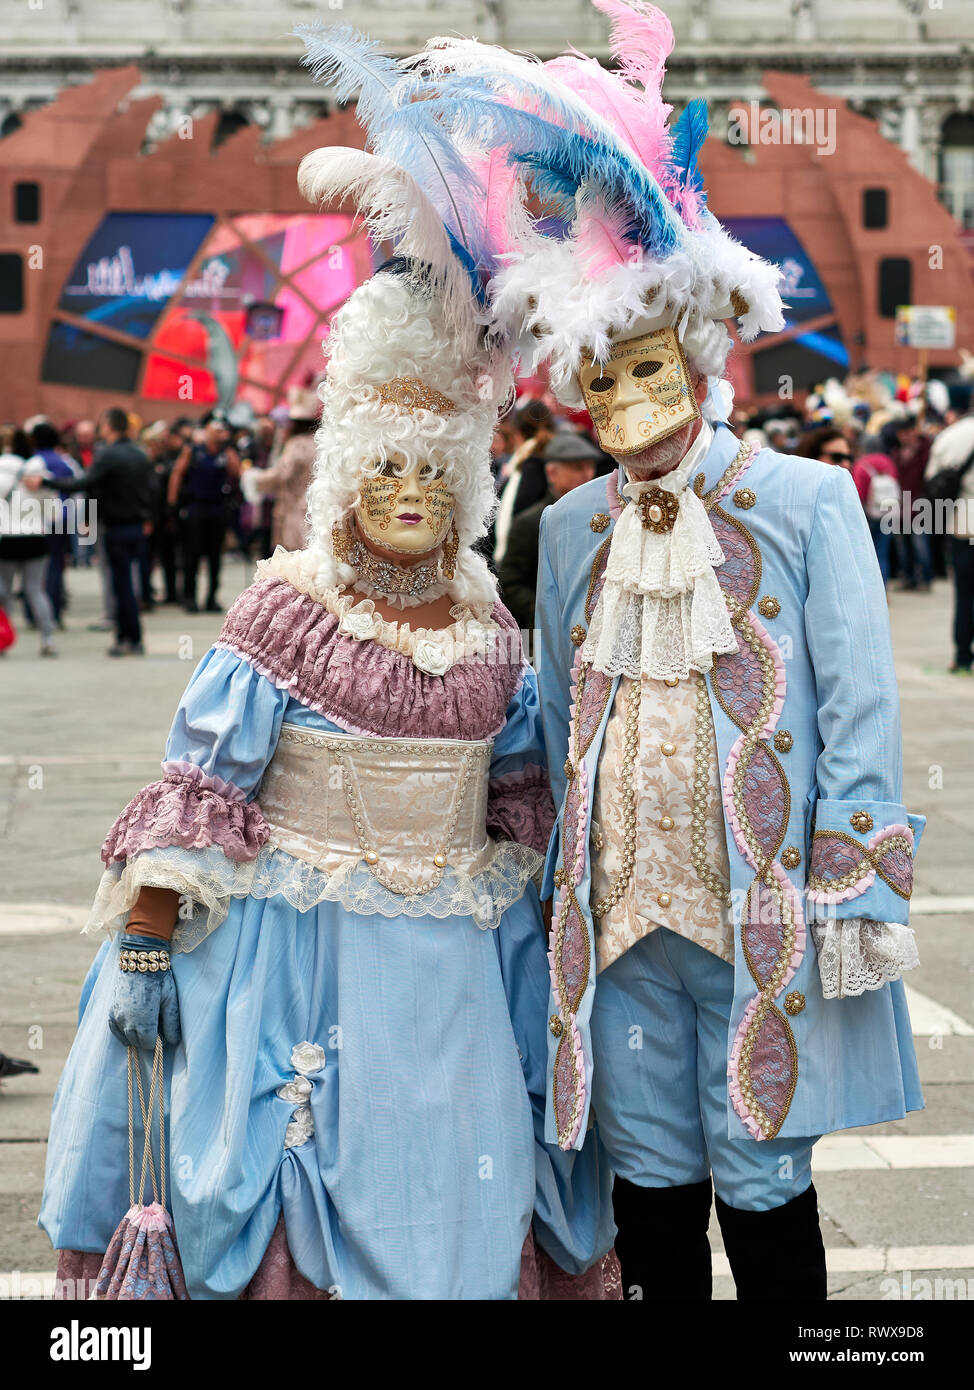 Als karneval verkleidet mann frau Karneval: Als